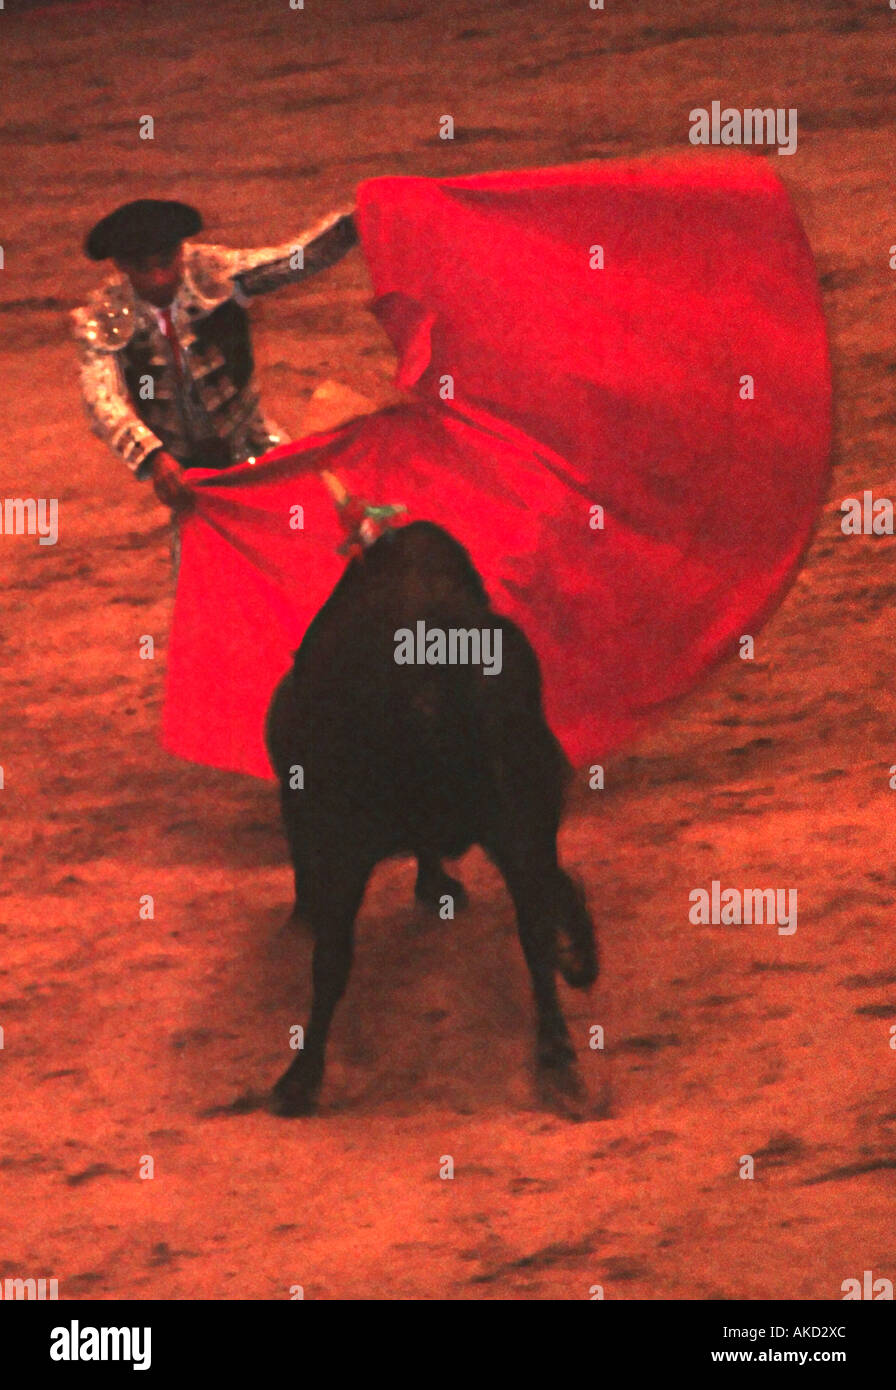 Bullfighter Waving Red Cape At Charging Bull Lisbon Bullring Portugal Stock Photo Alamy